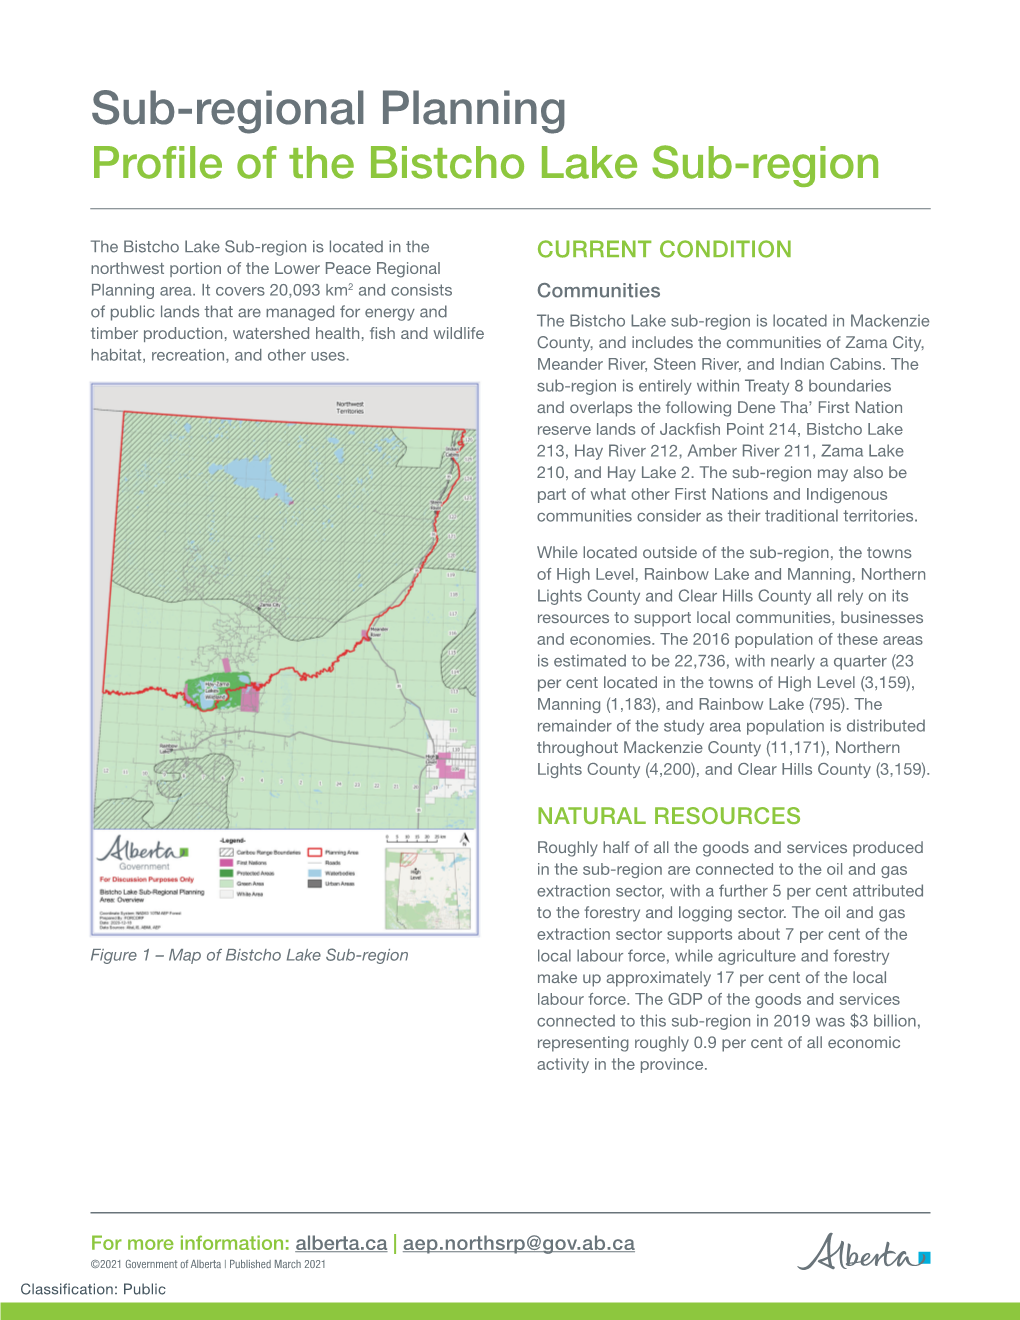 Profile of the Bistcho Lake Sub-Region